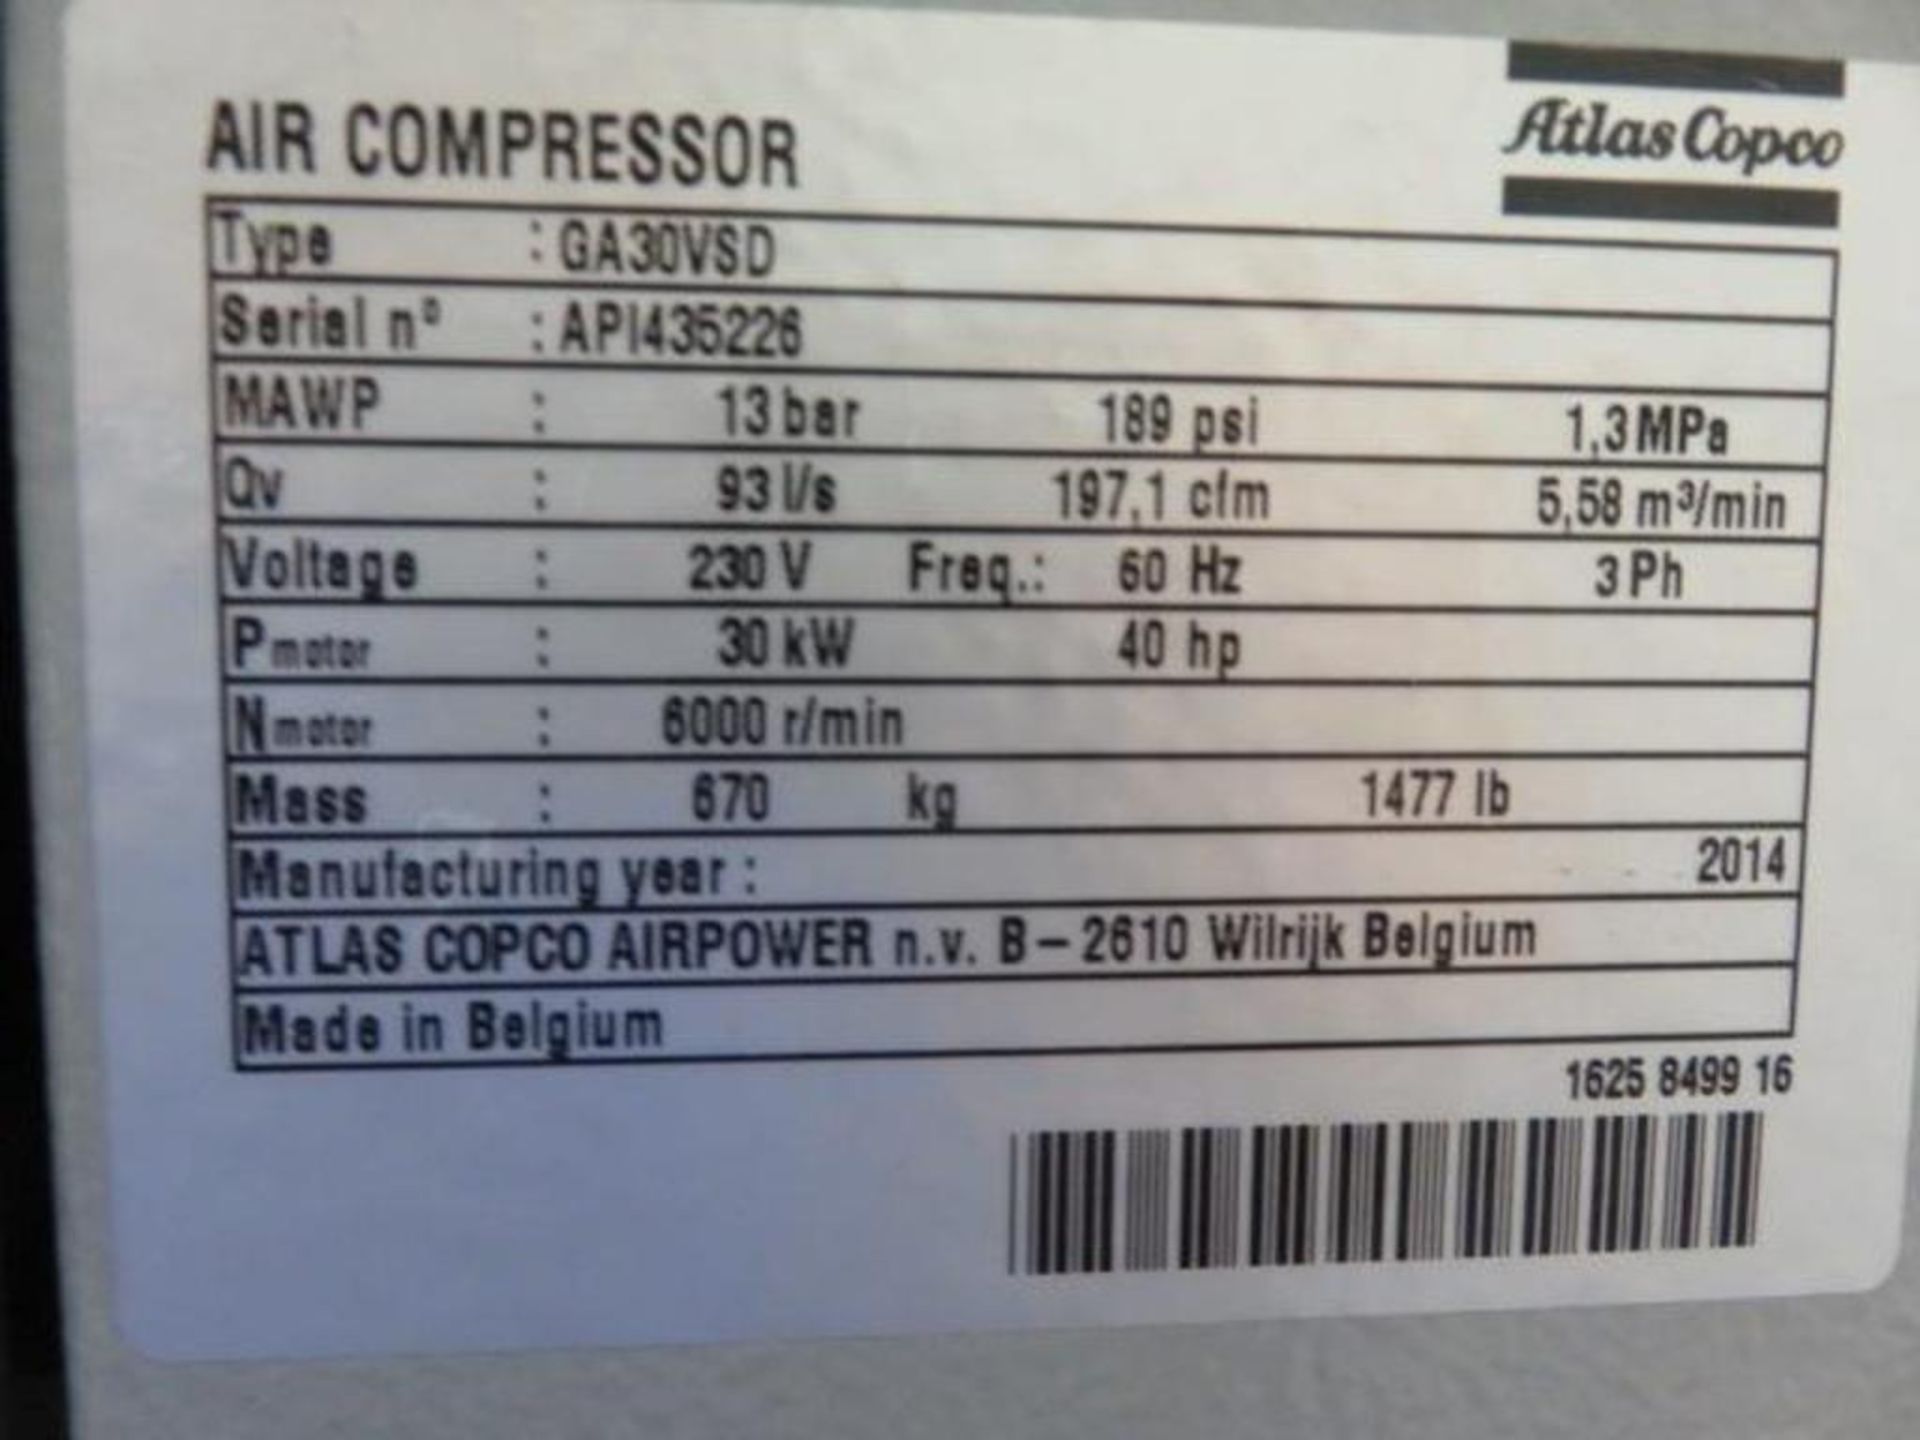 Atlas Copco 40 HP Variable Speed Drive Rotary Screw Air Compressor Model GA30VSD, S/N AP1435226 (201 - Image 3 of 3